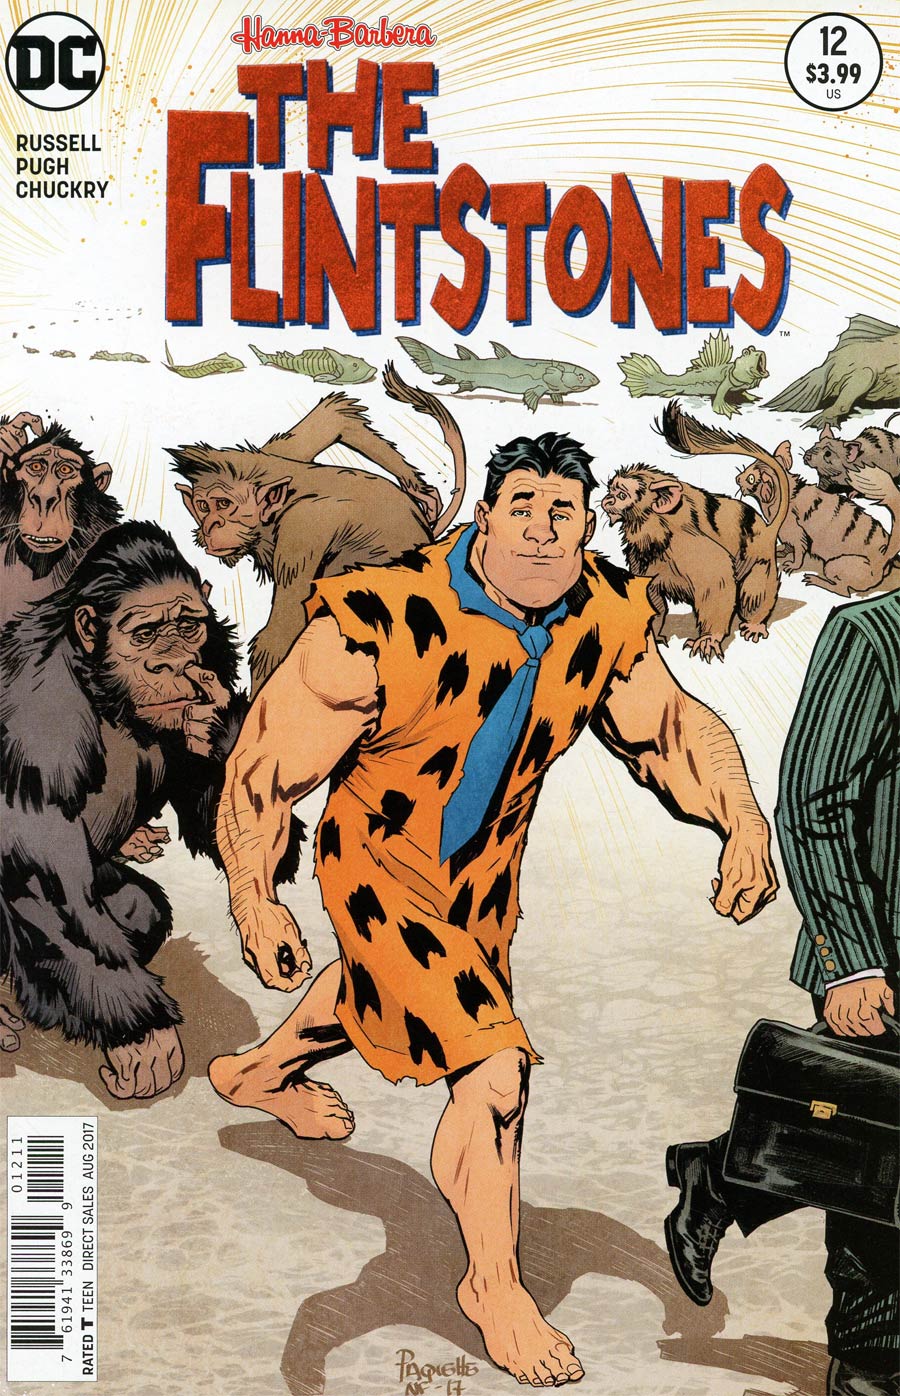 Flintstones (DC) #12 Cover B Variant Rick Leonardi & Scott Hanna Cover